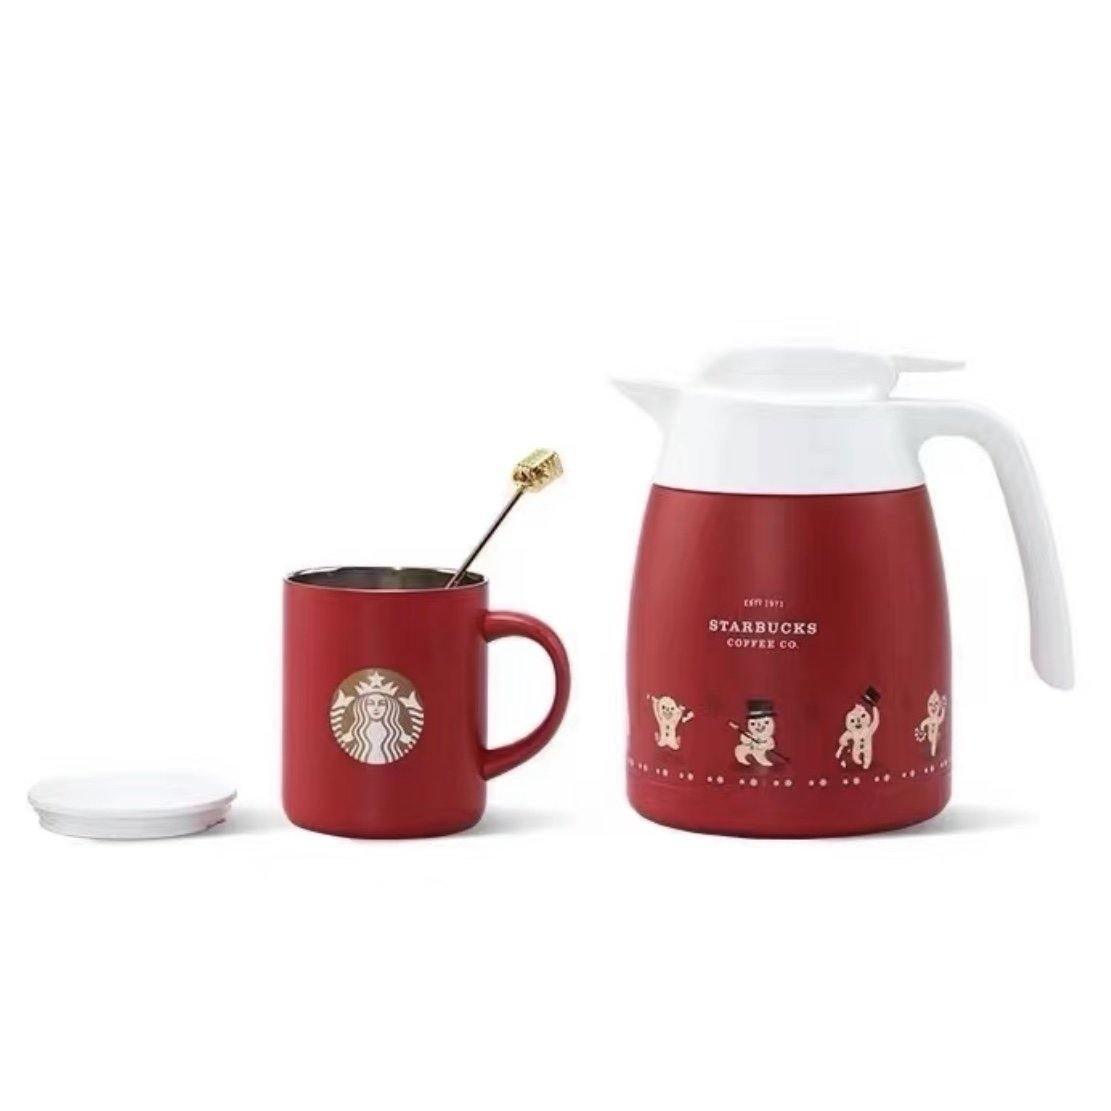 Starbucks Thermos Stainless Steel Cup and 1 Liter Water Jug set - Starbucks China Christmas 2021 - Ann Ann Starbucks